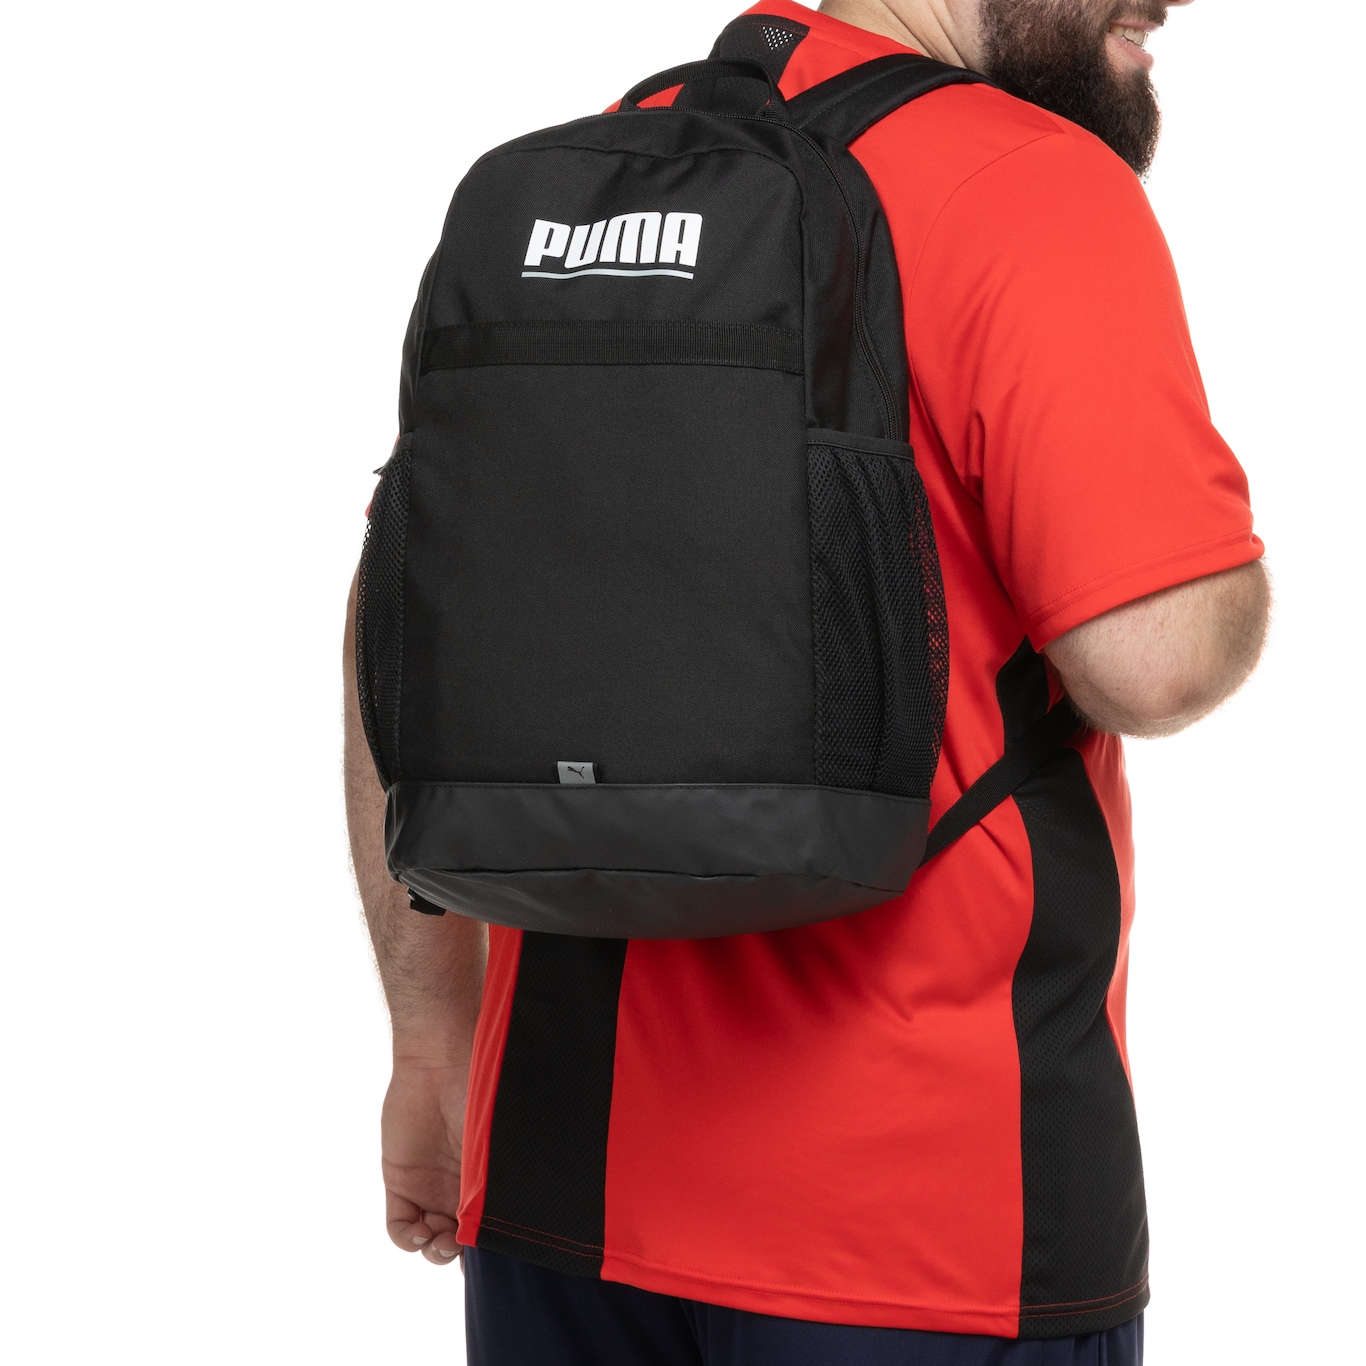 Mochila Puma Plus Backpack - 23 Litros - Foto 1